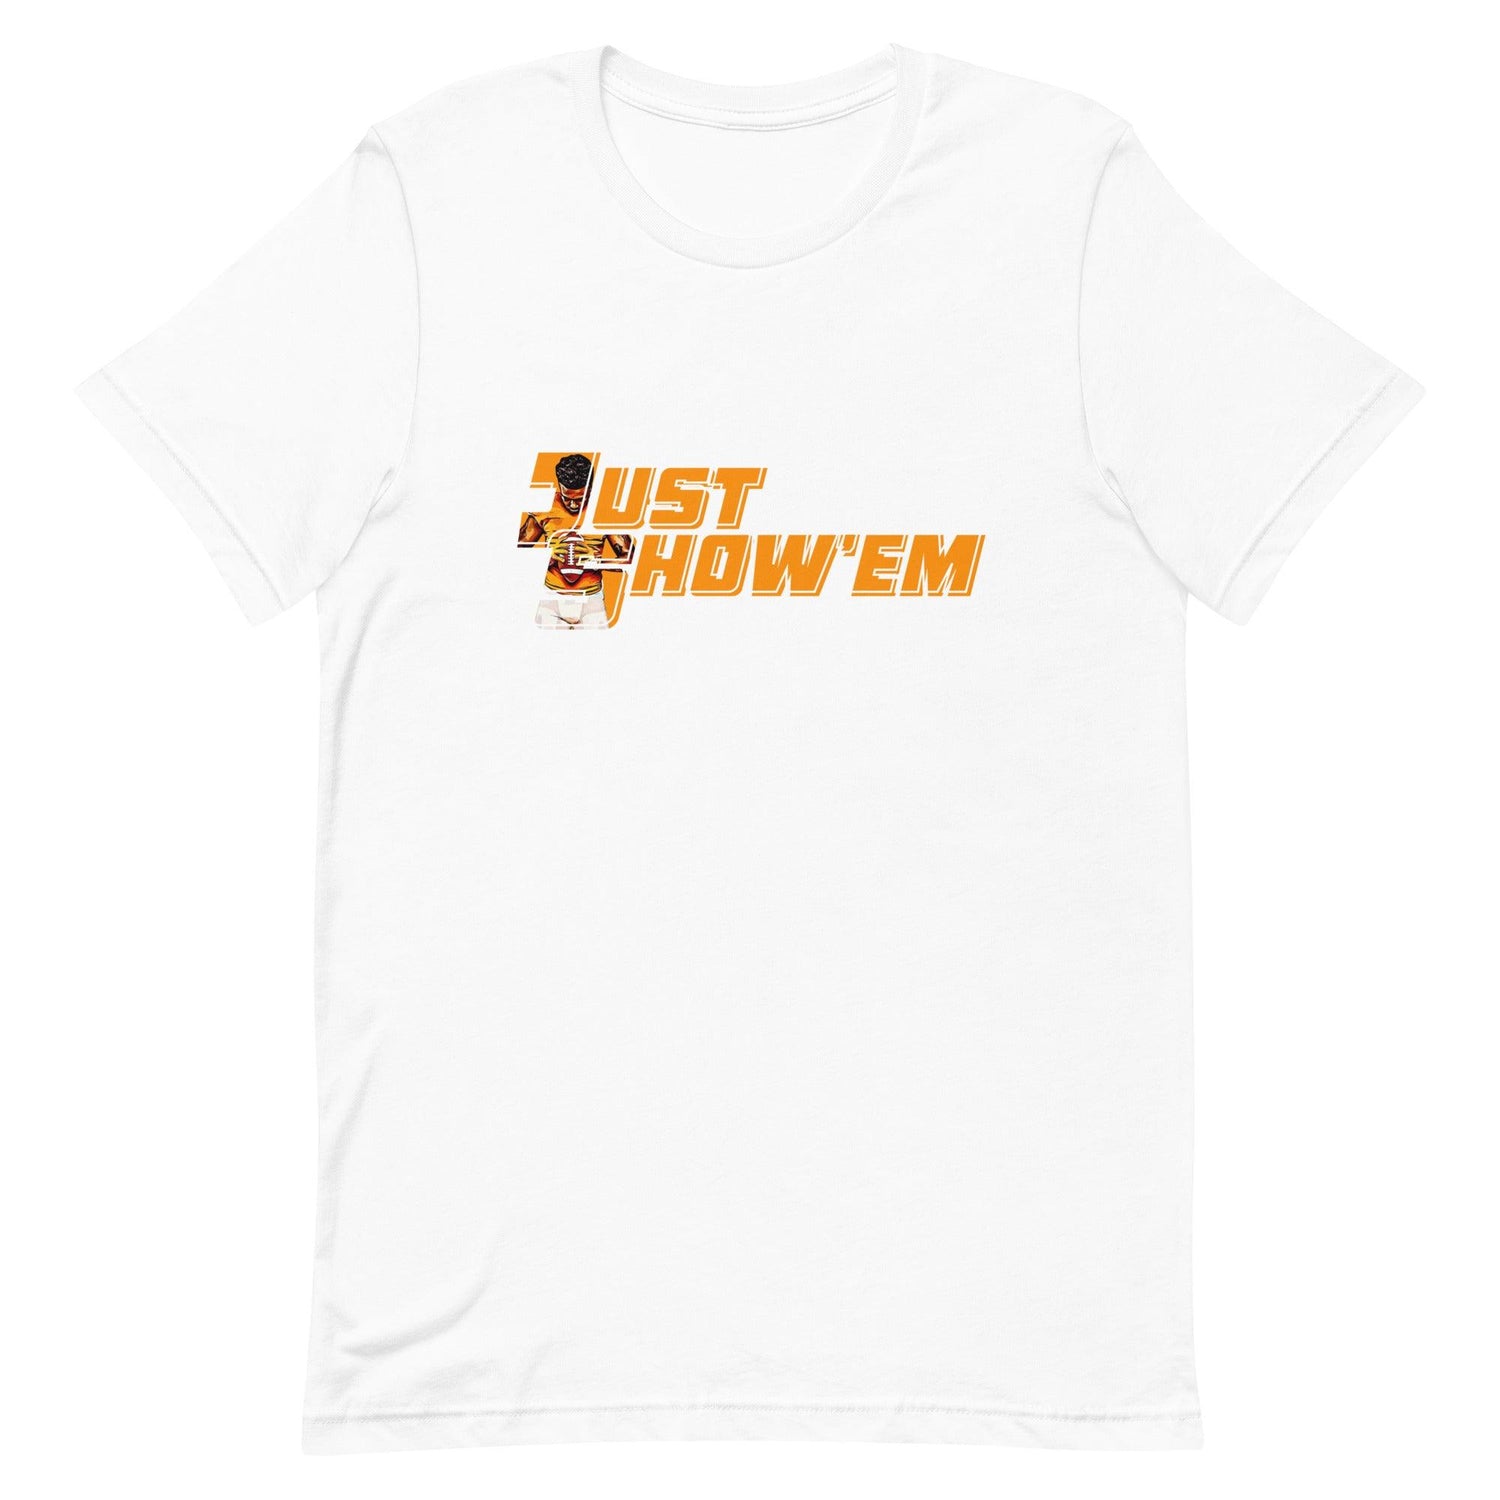 Jatavion Sanders "Show'em" t-shirt - Fan Arch